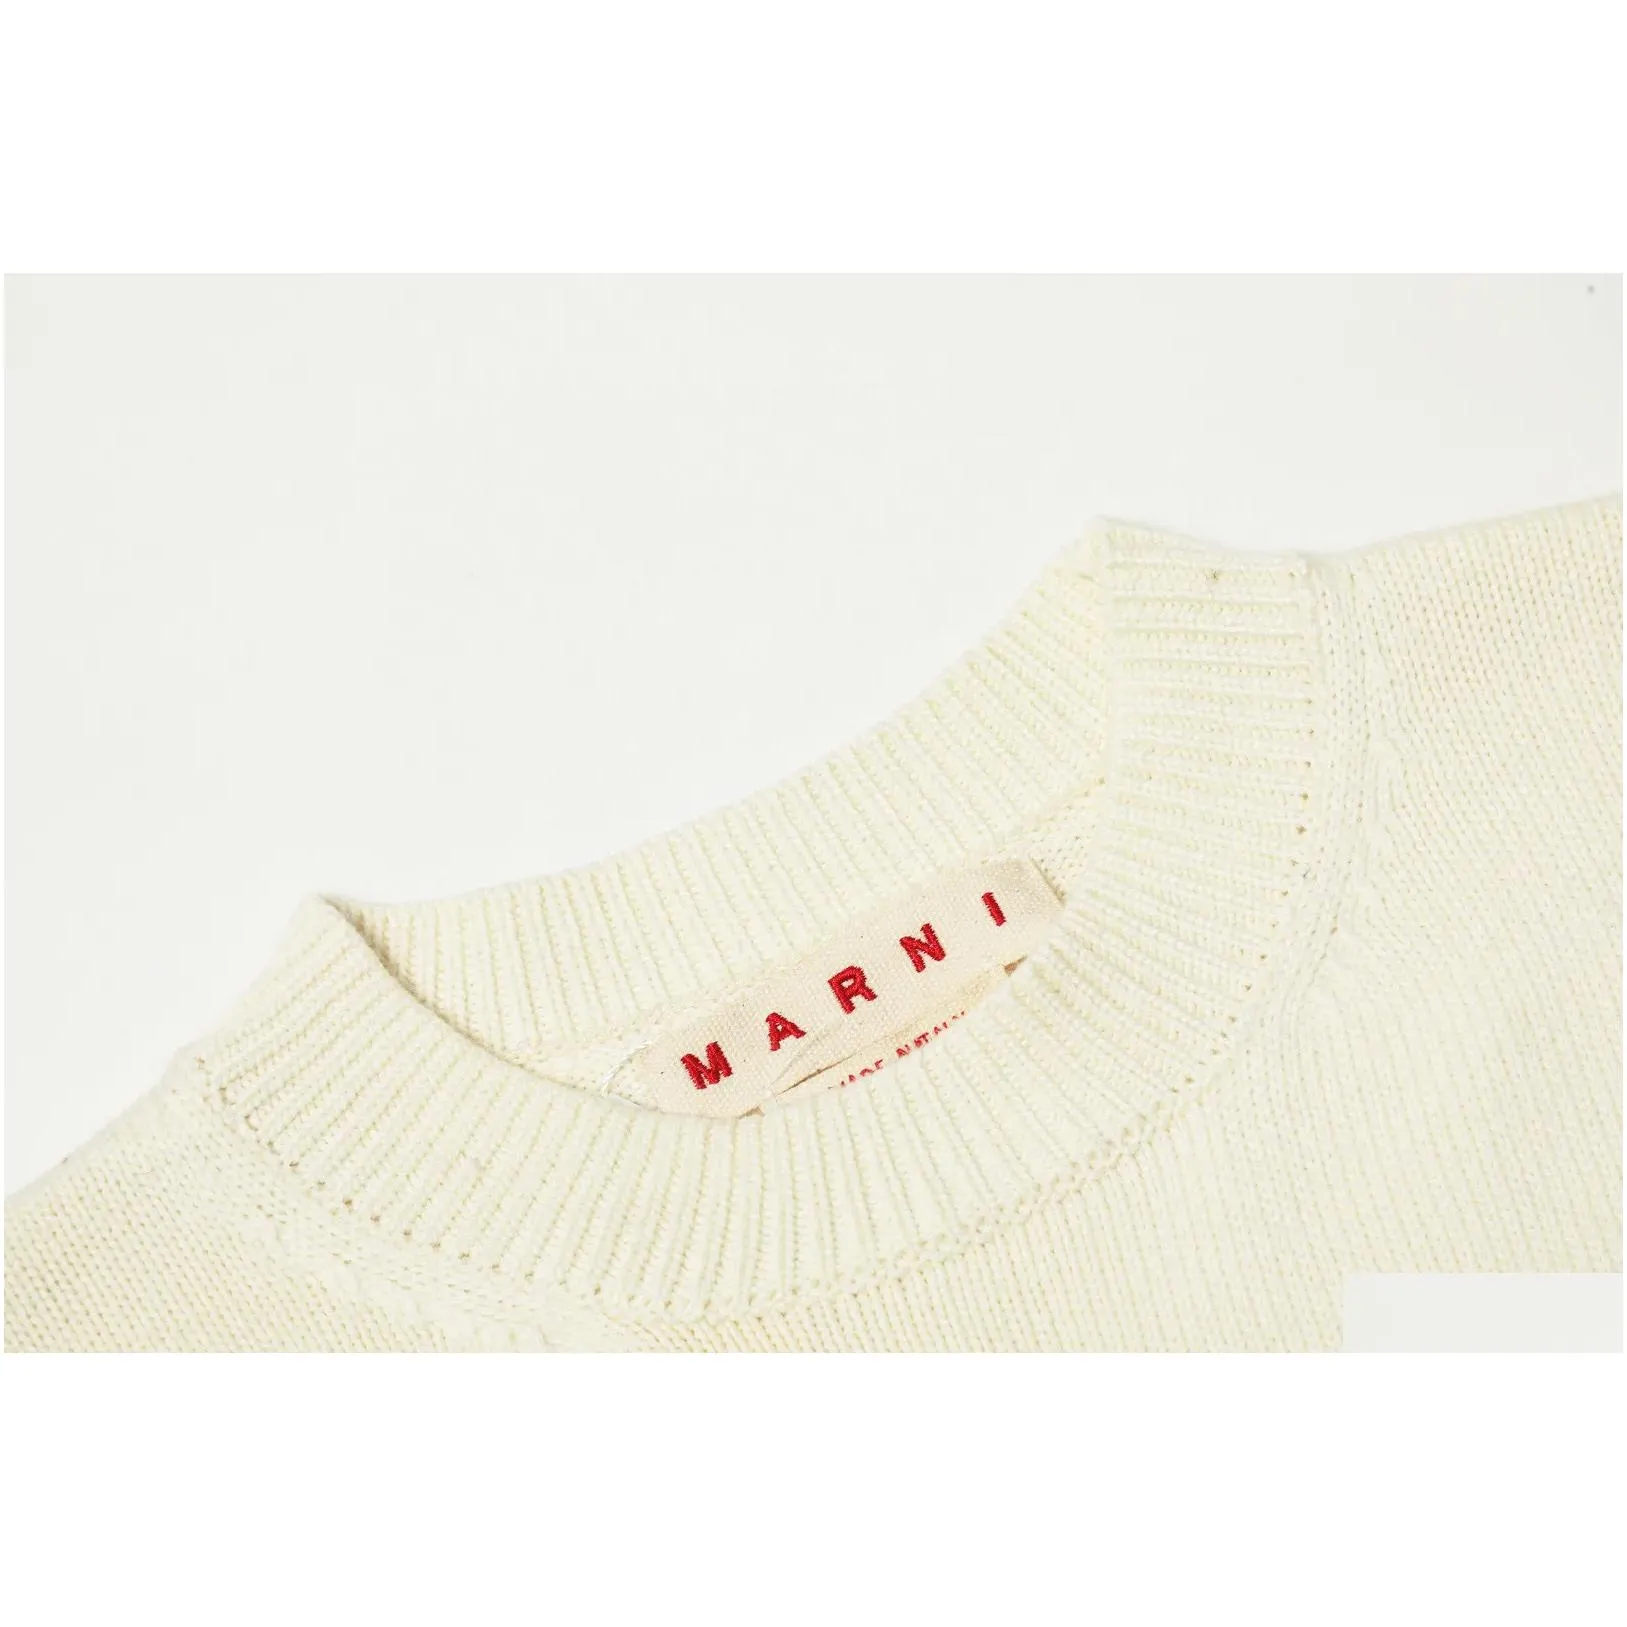 Men`s Plus Size Hoodies & Sweatshirts in autumn / winter 2022acquard knitting machine e Custom jnlarged detail crew neck cotton 86675